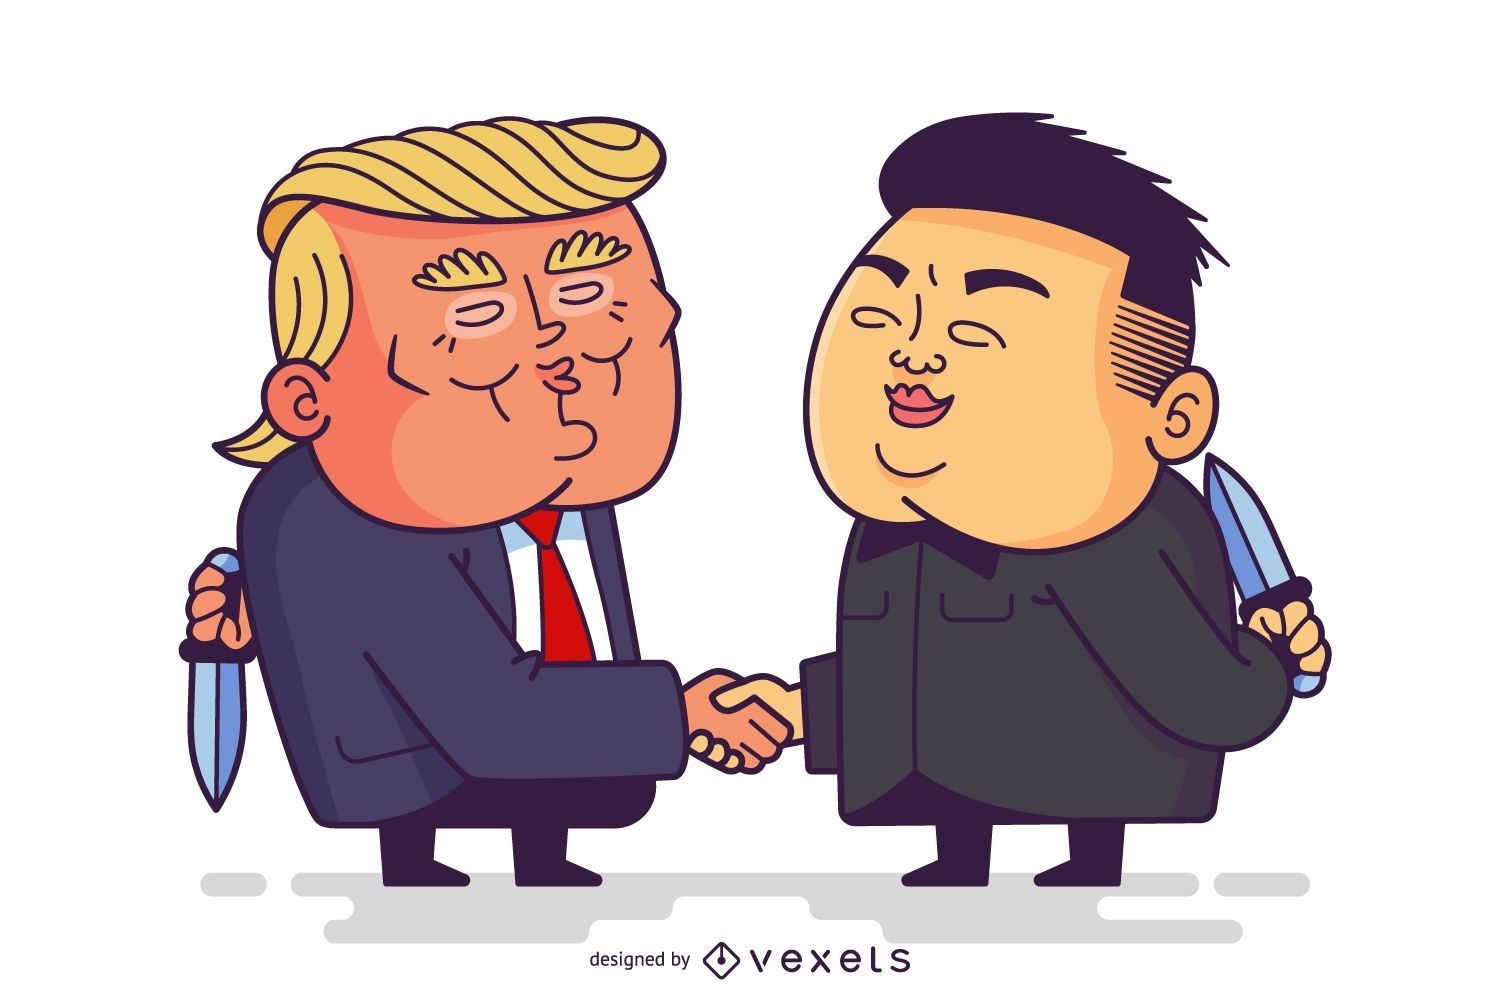 Funny Trump and Kim Jong Un cartoon